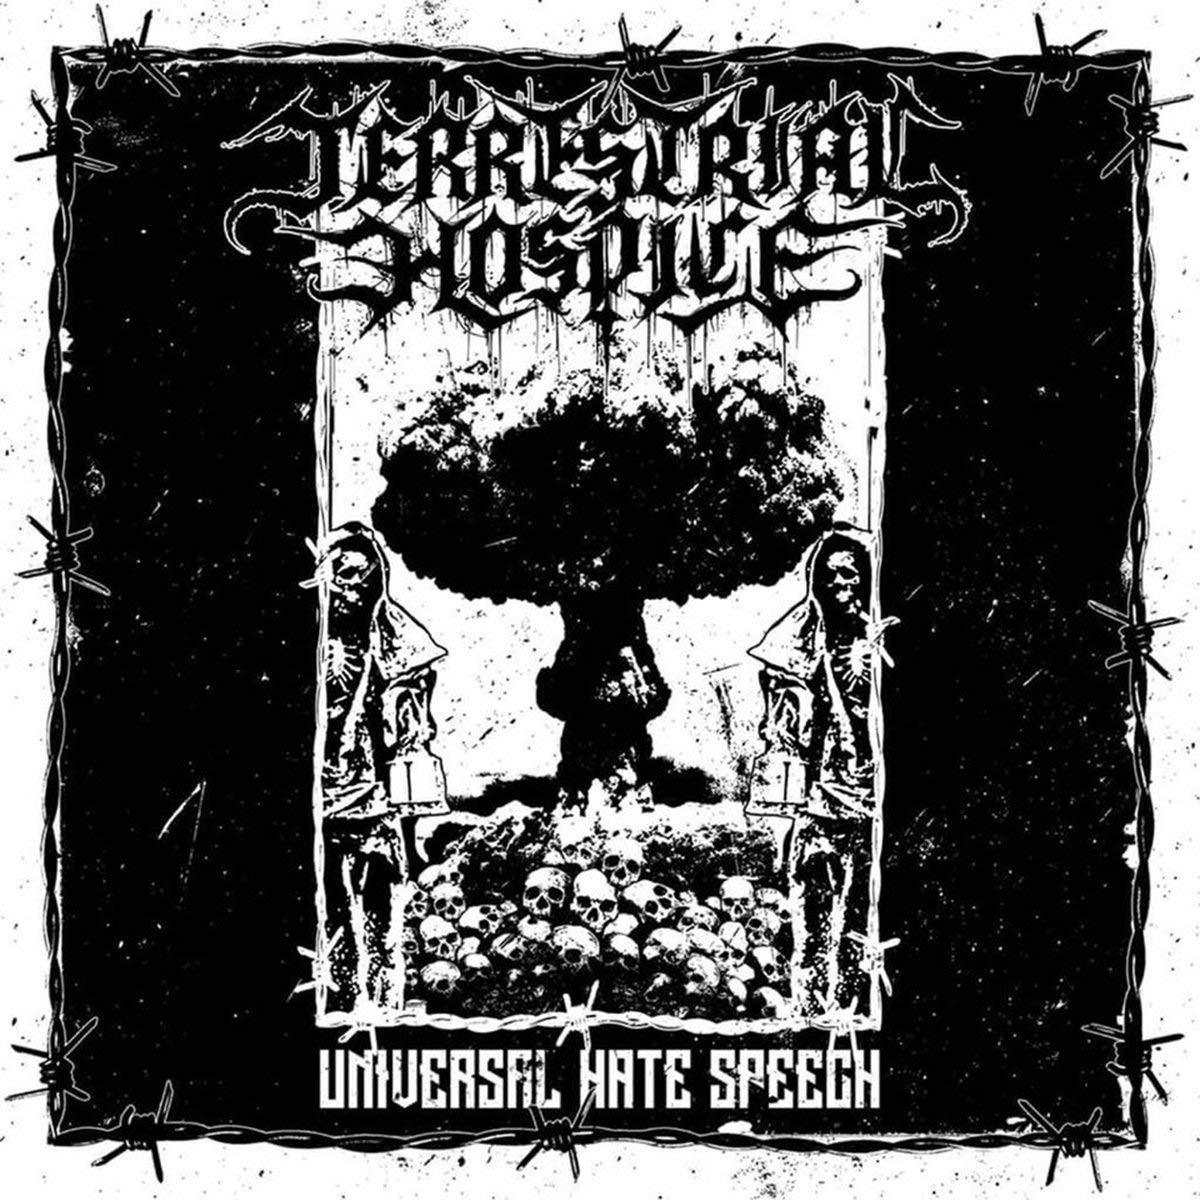 Terrestrial Hospice - Universal Hate Speech